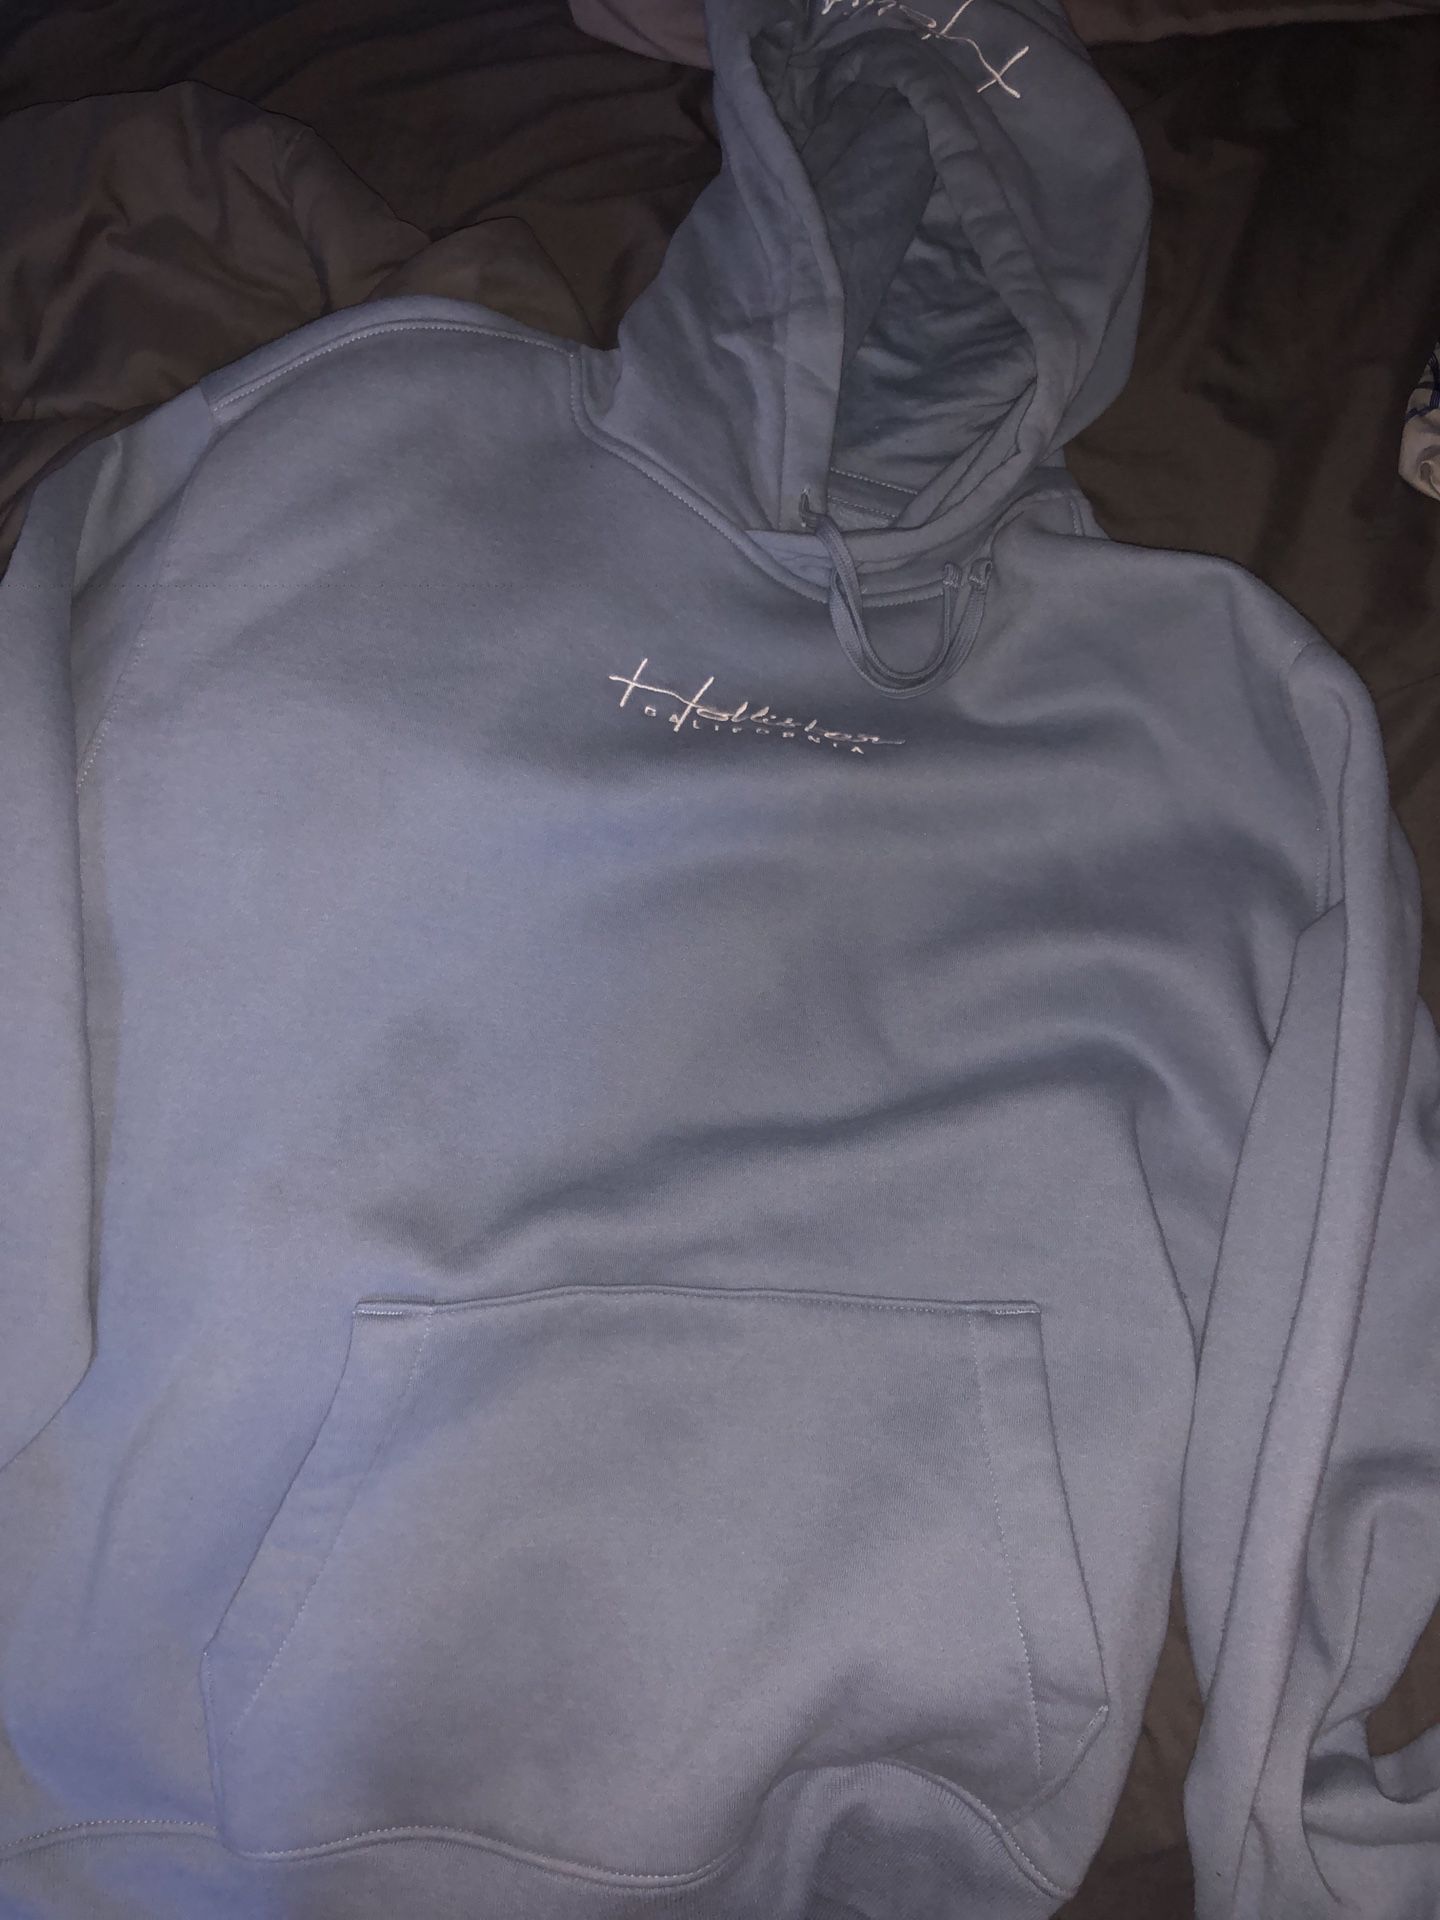 ligjt blue hollister hoodie size medium